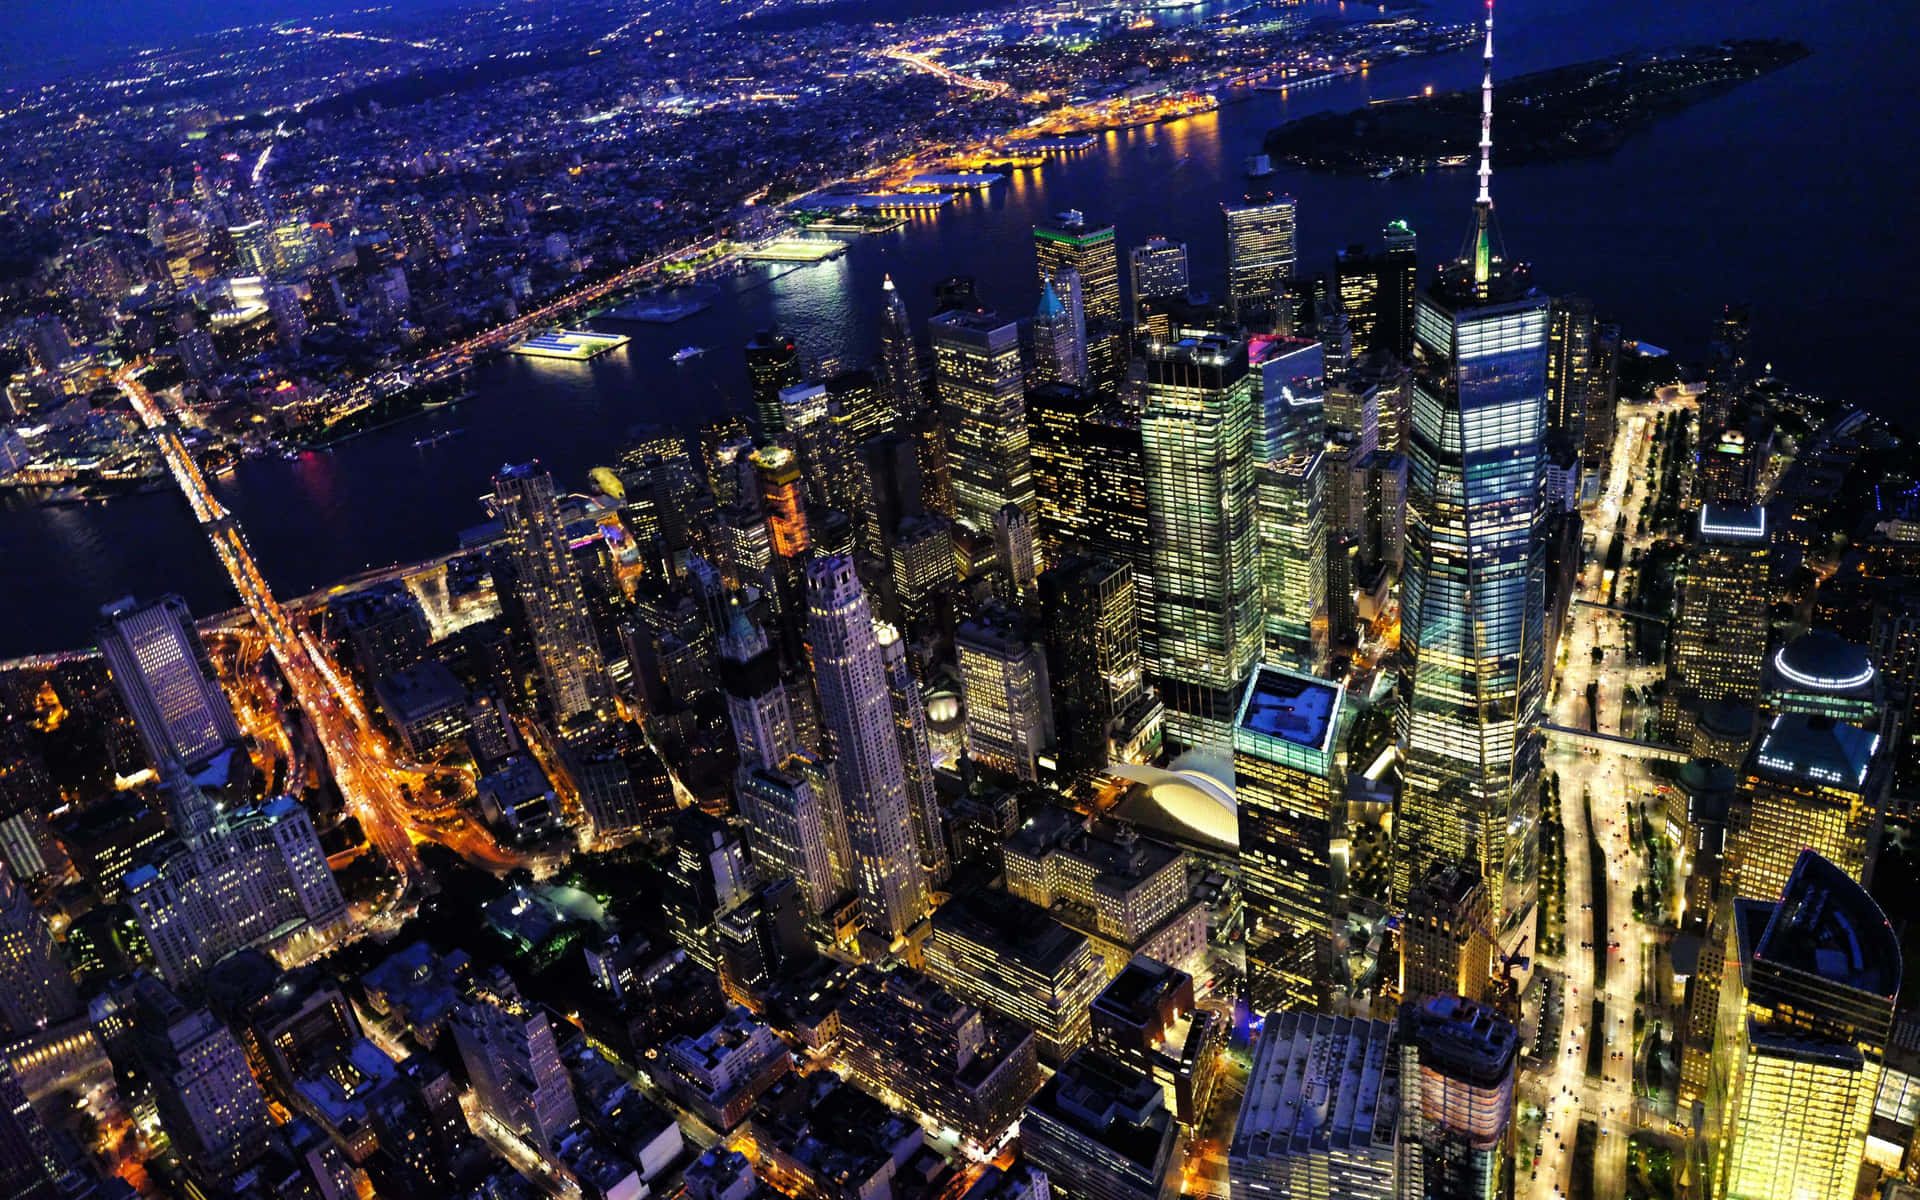 Caption: A Stunning Nighttime Panorama of New York City